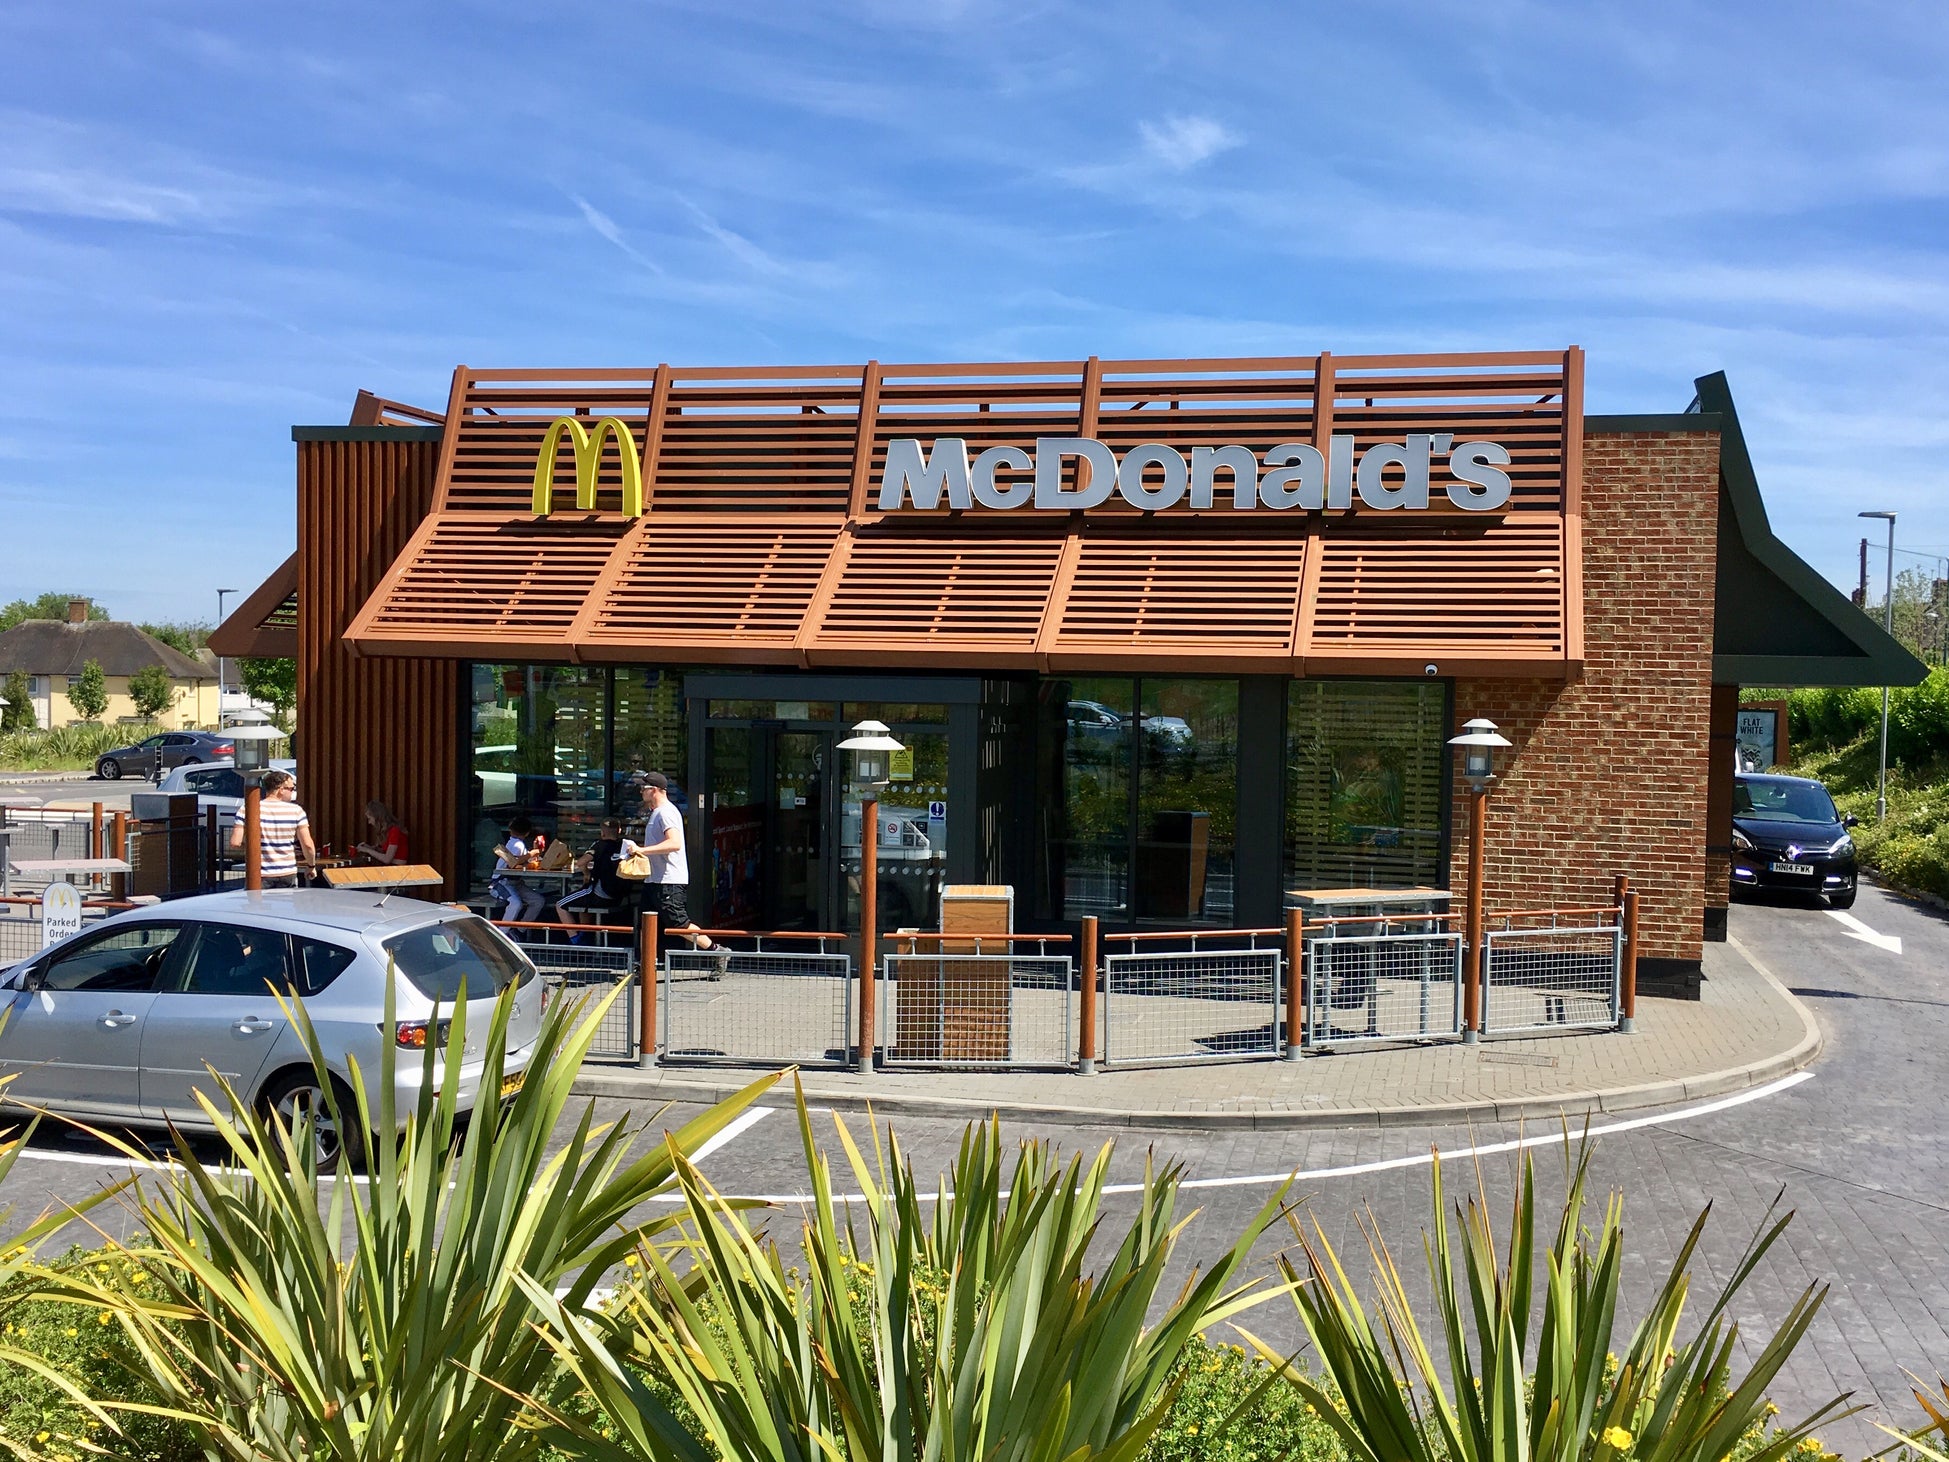 A McDonald's Drive-Thru and restaurant in Nottingham, United Kingdom